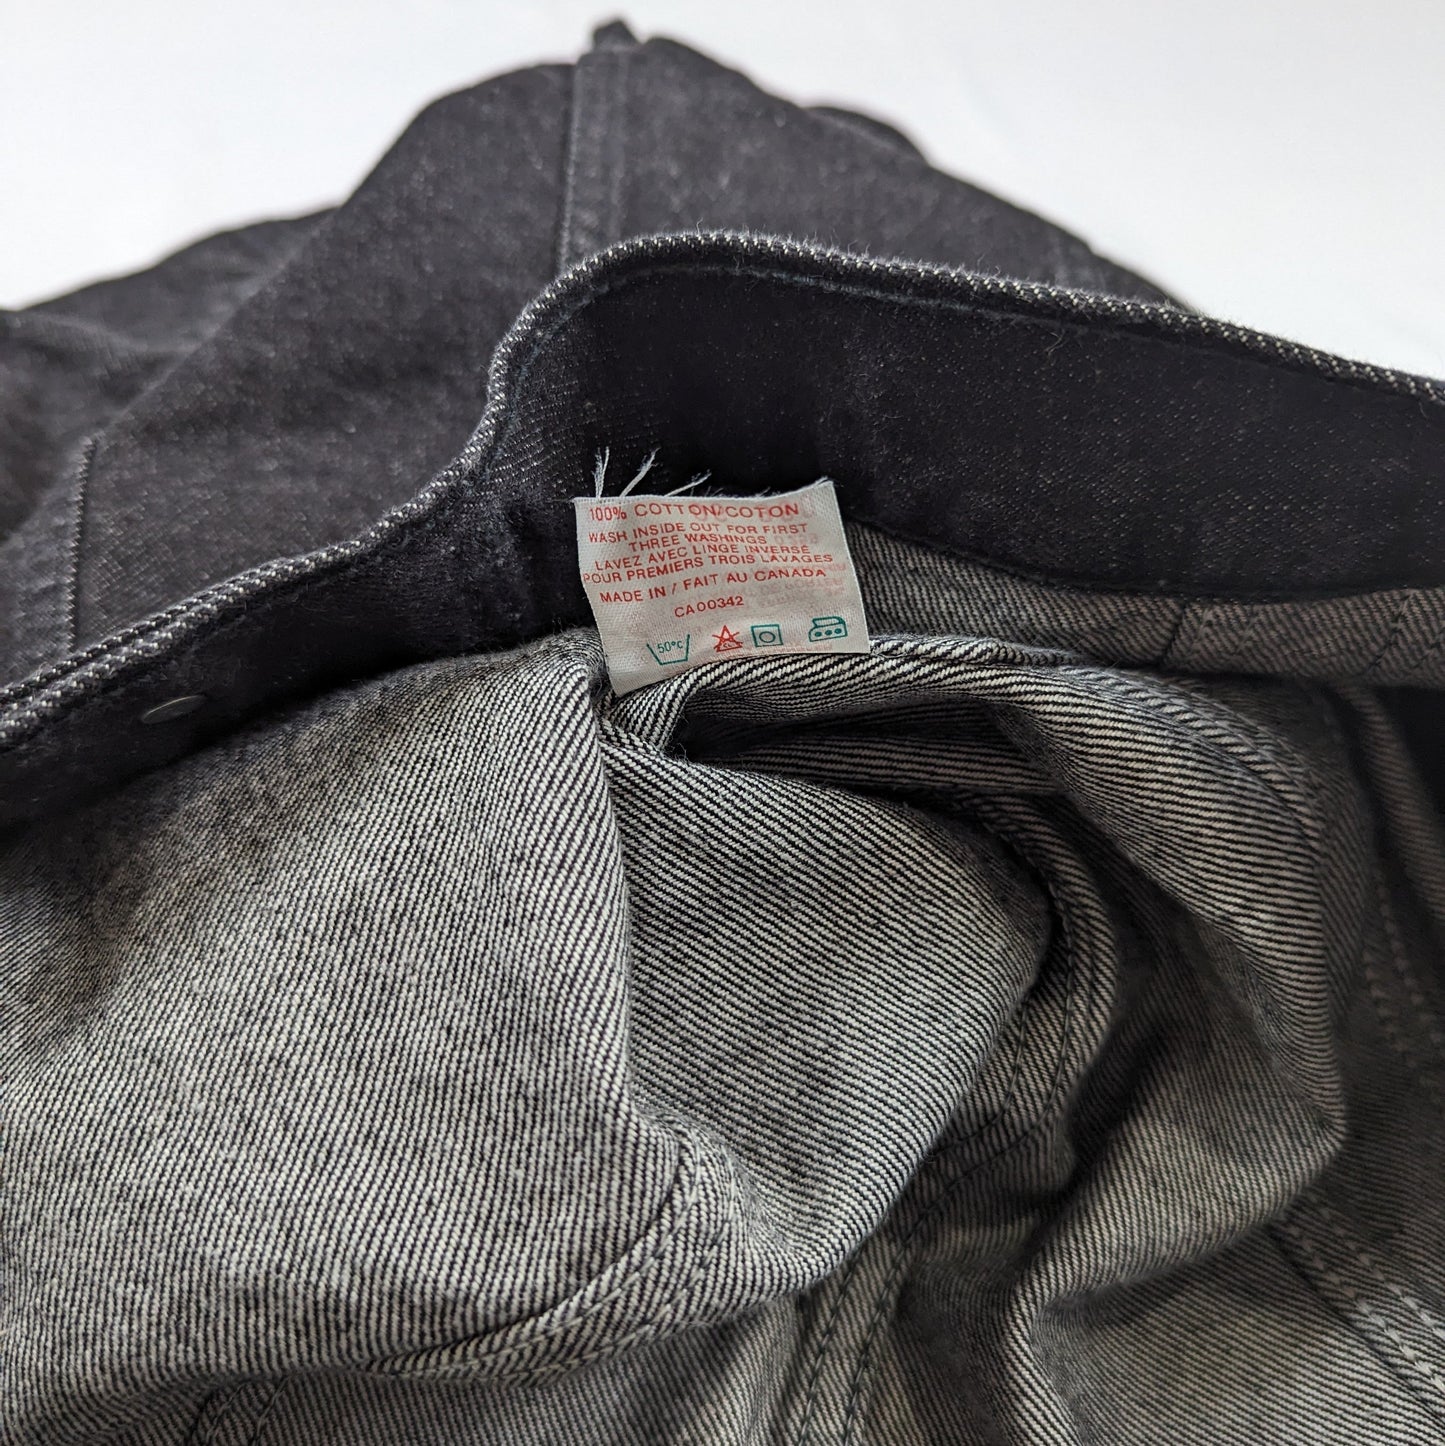 Levis jean jacket deadstock vintage jean jacket black denim made in Canada